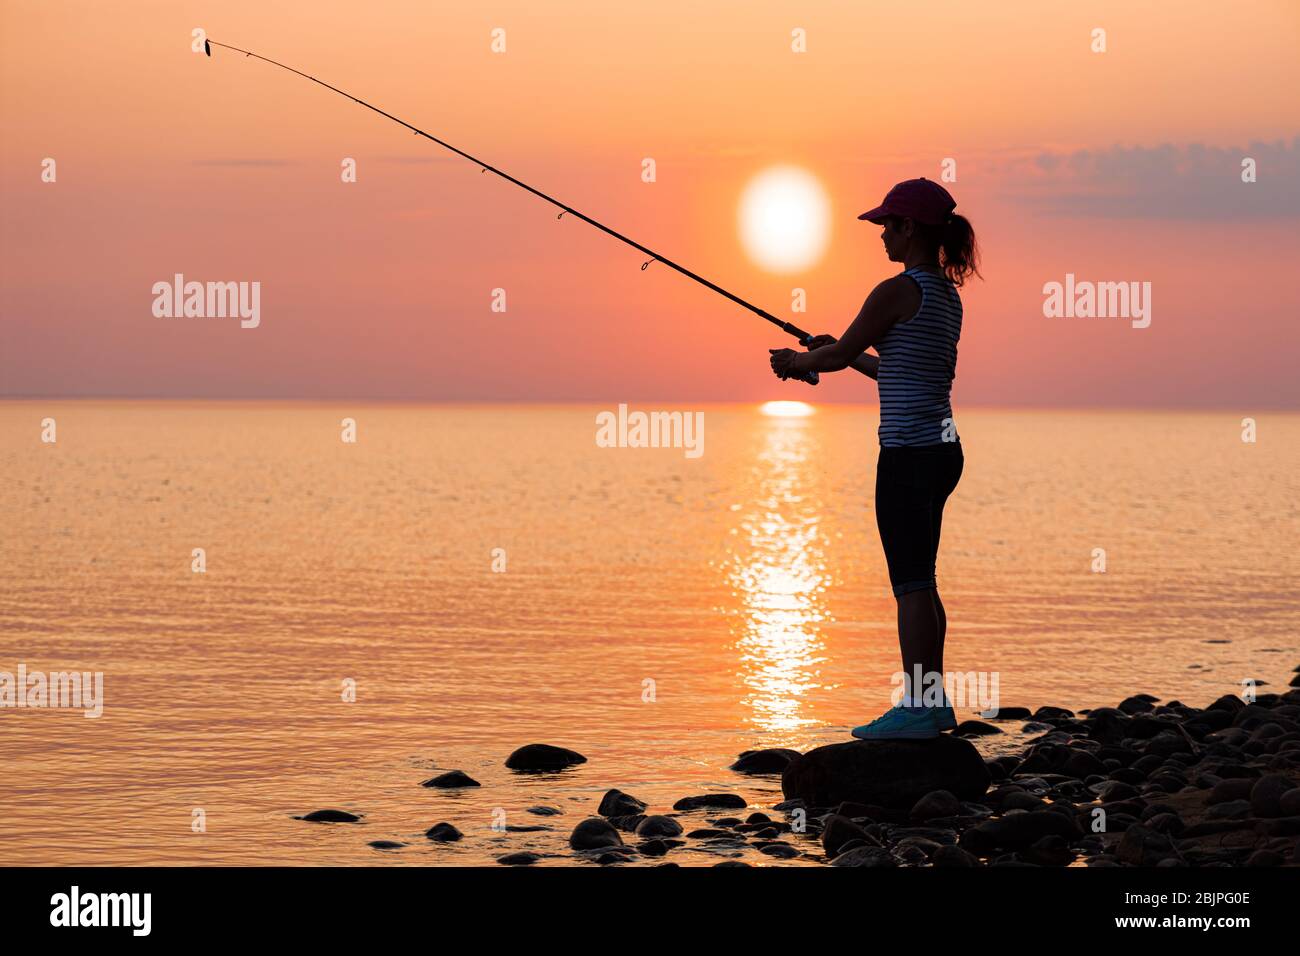 Woman fishing on Fishing rod spinning at sunset background Stock Photo -  Alamy